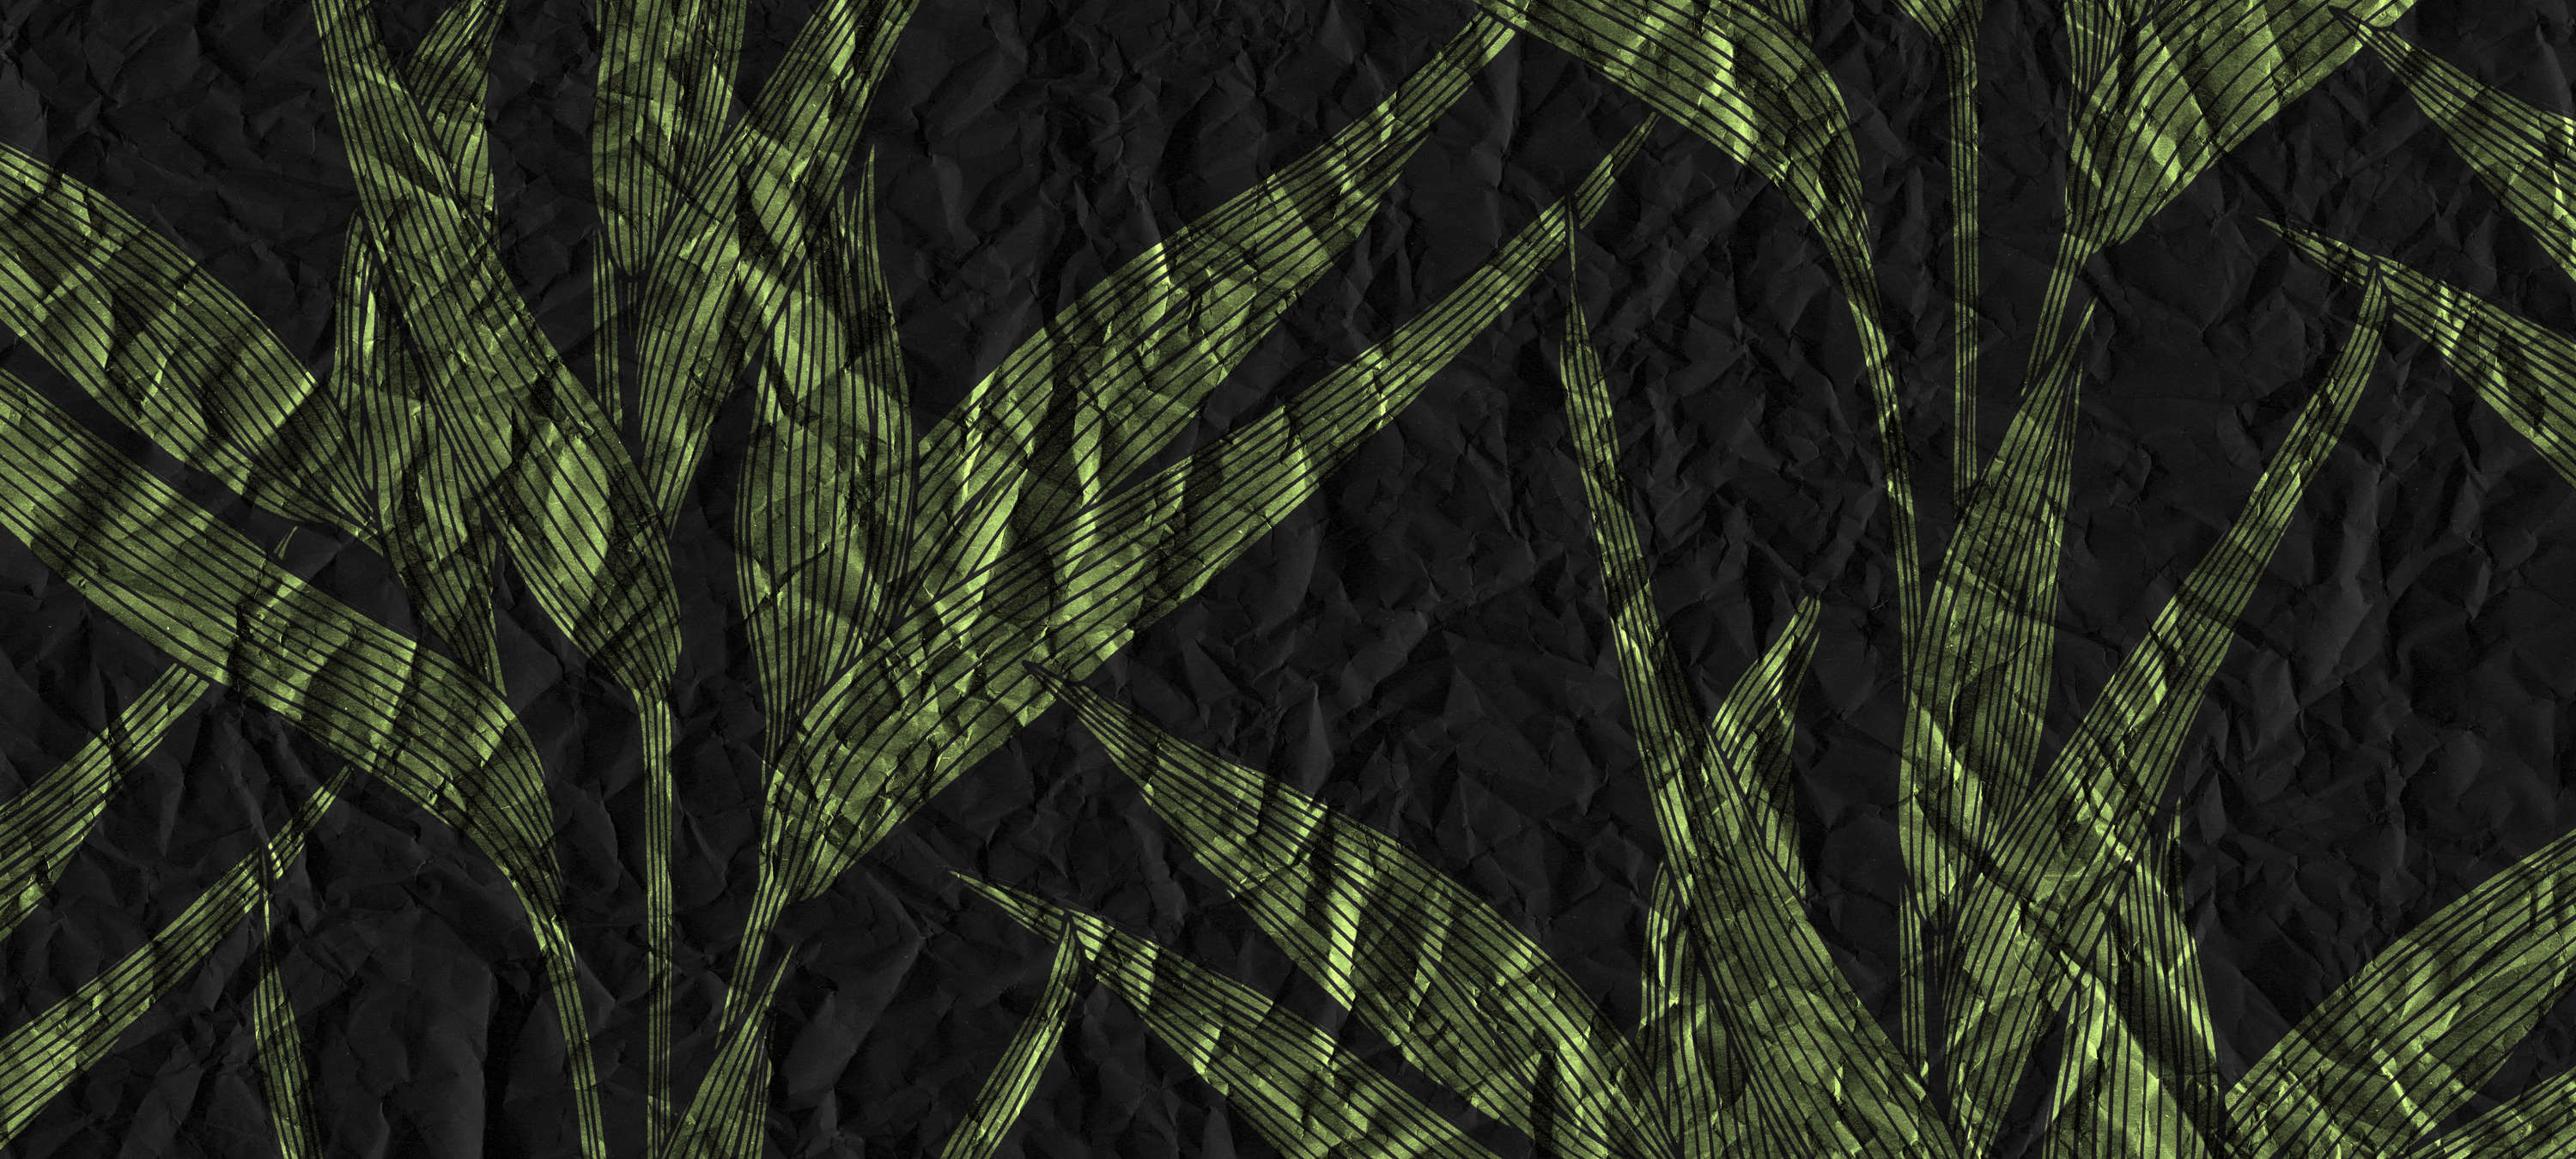             Papel Pintado Hojas Oscuras con Papel Óptico - Verde, Negro
        